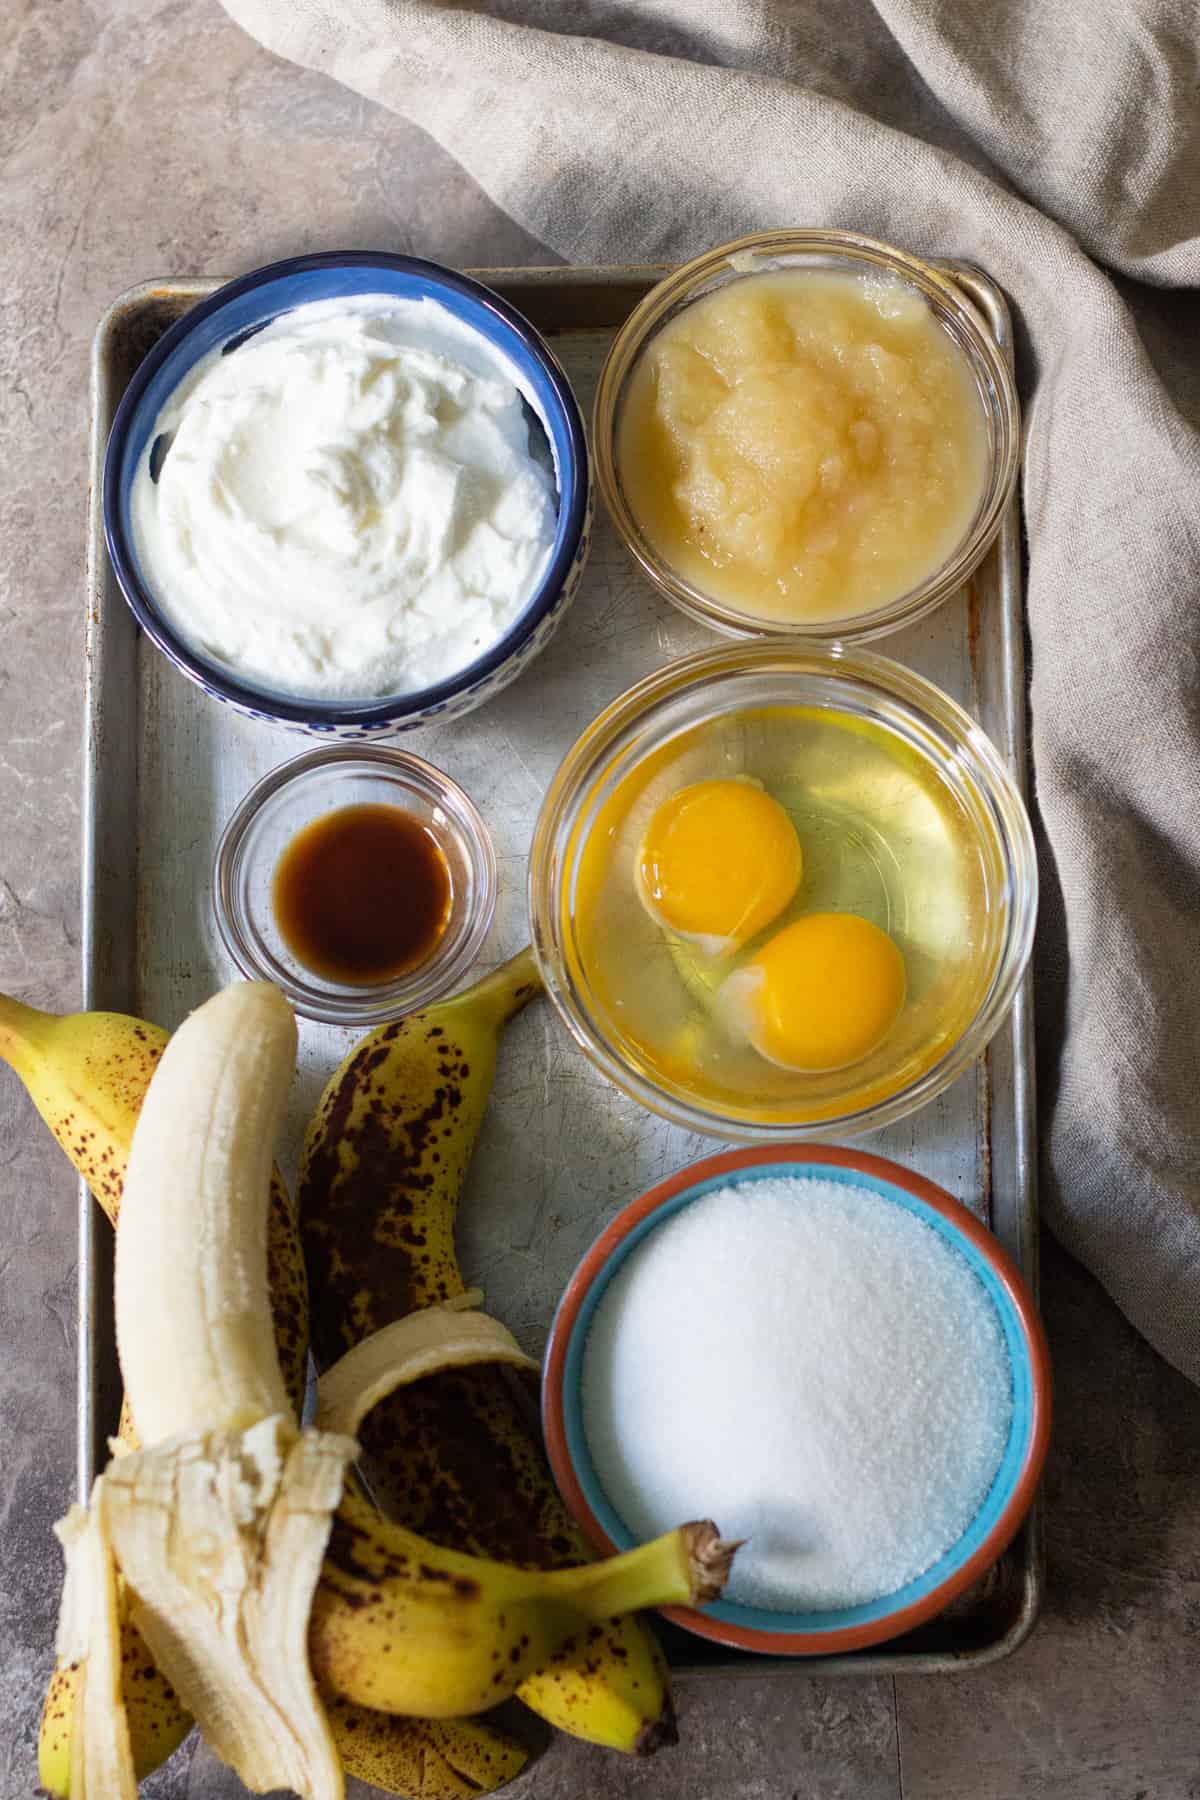 to make healthy banana bread you need applesauce, yogurt, eggs, sugar, bananas and flour. 